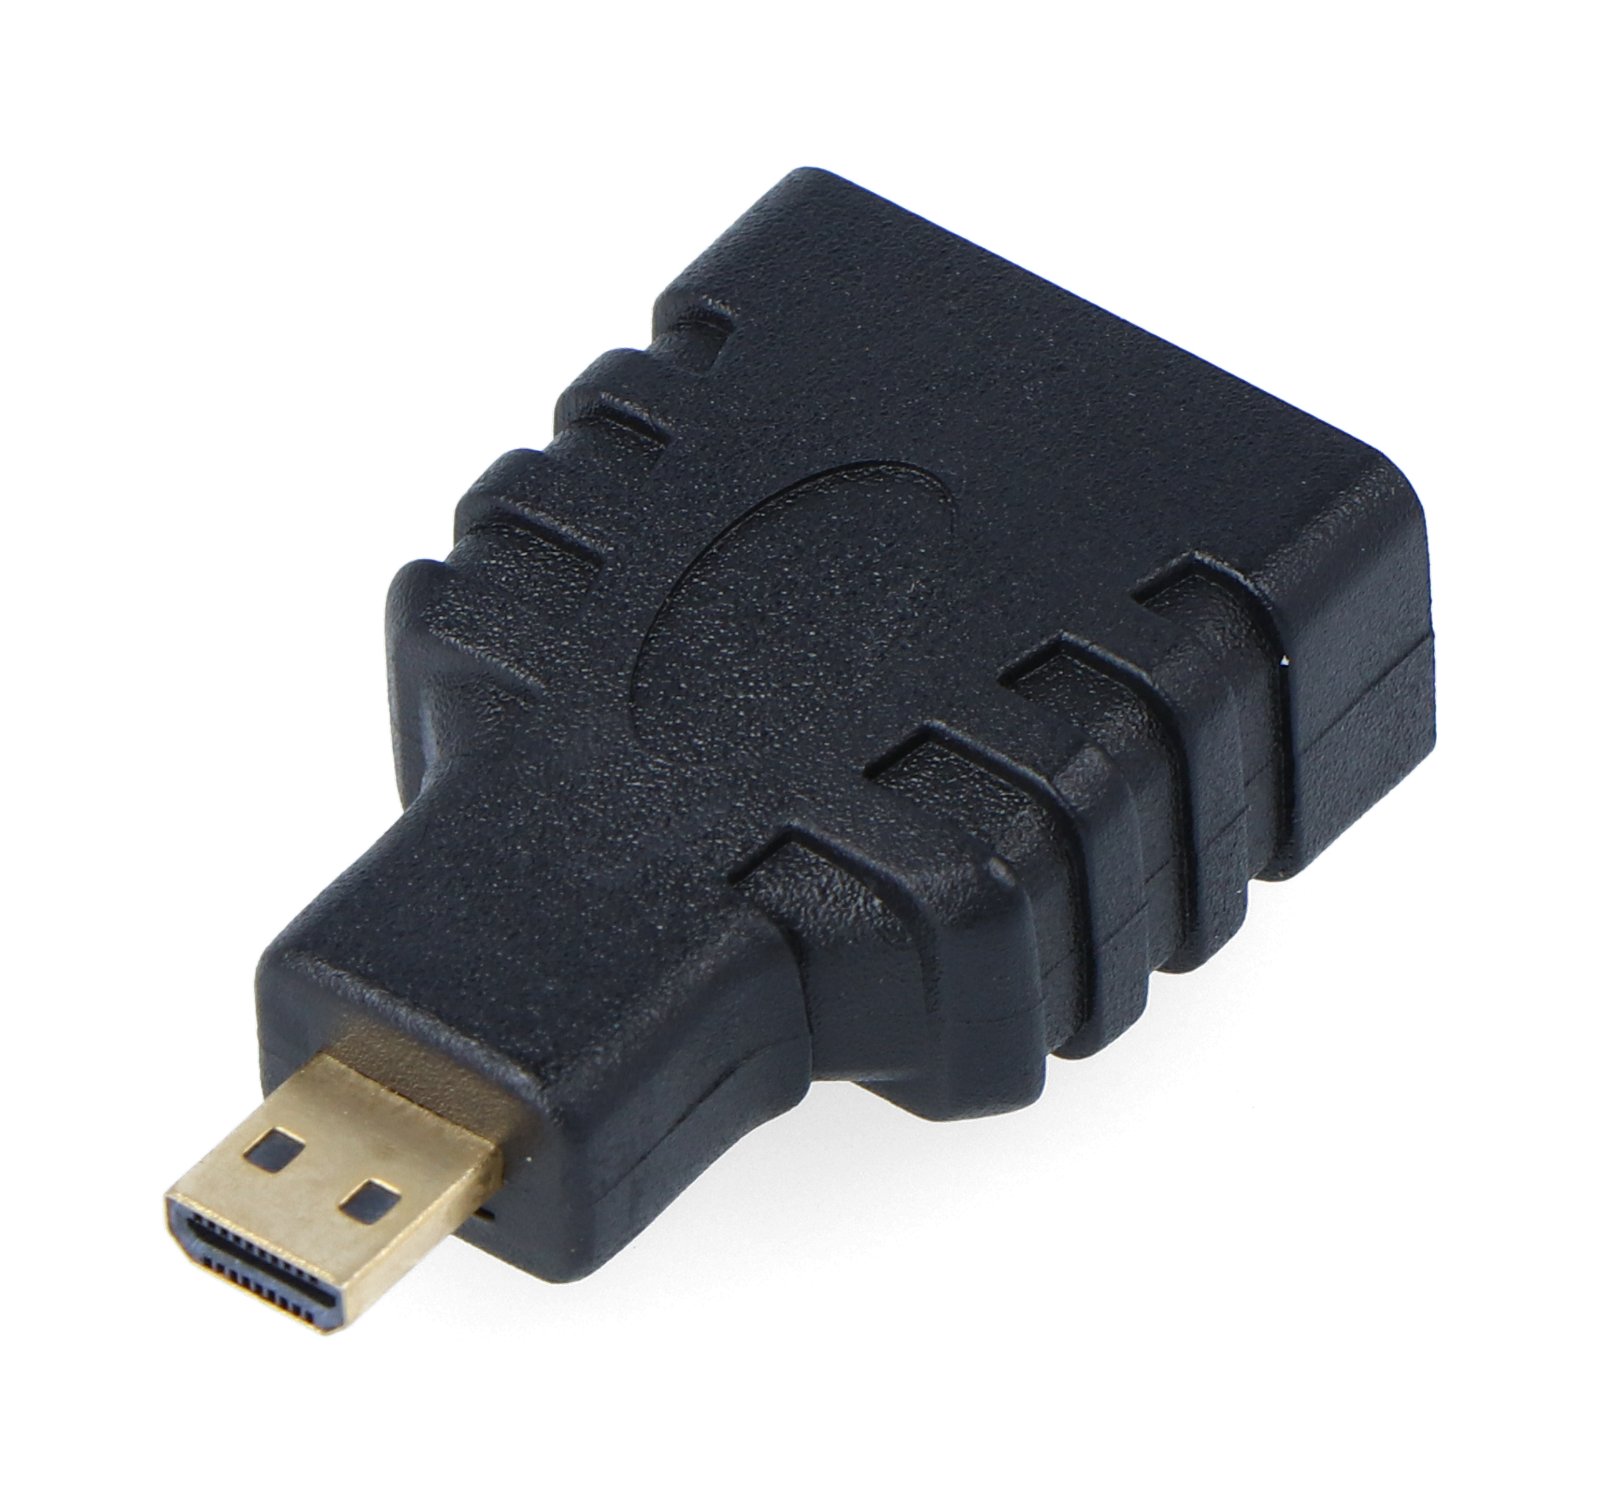 MicroHDMI - HDMI-Adapter